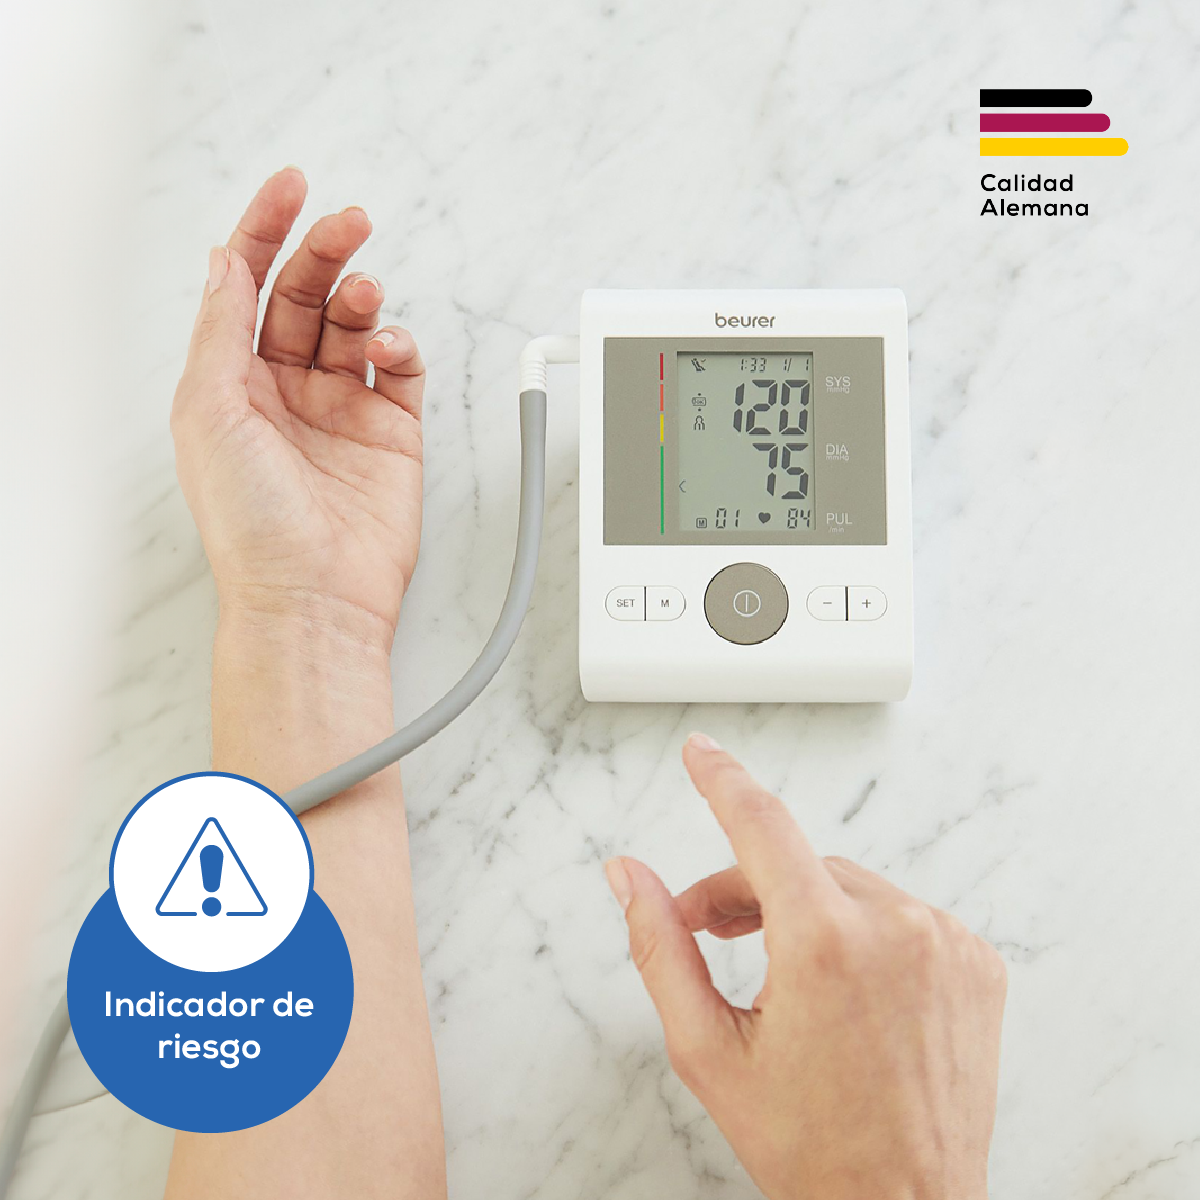 Monitor de presión arterial baumanómetro digital de brazo BM28 Marca Beurer